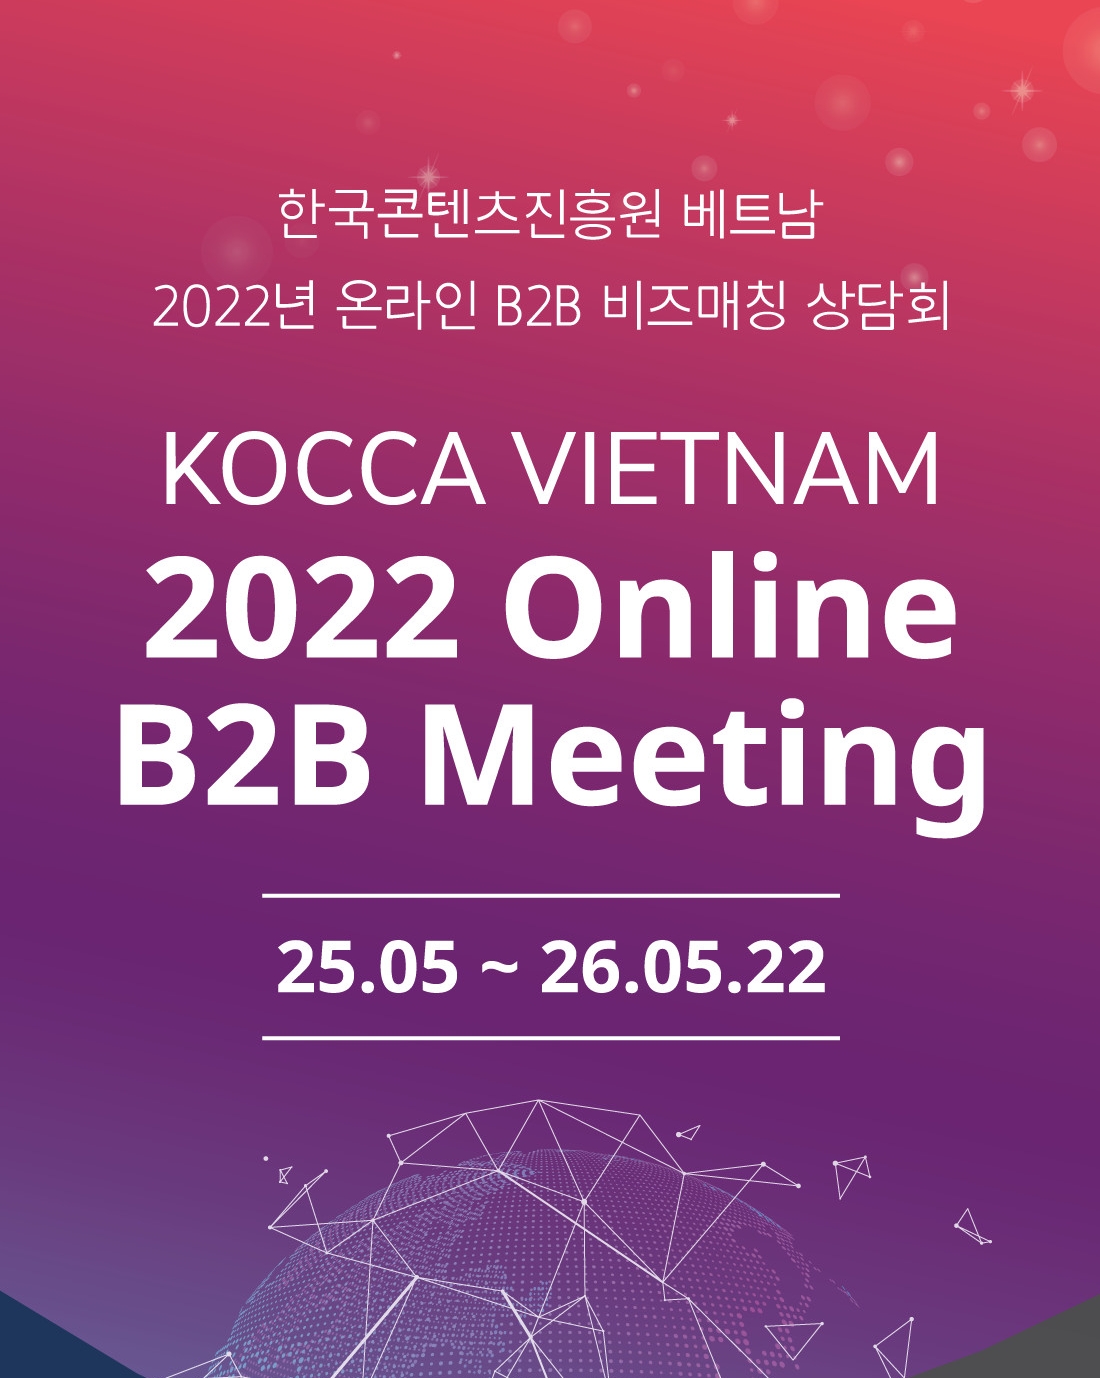 KOCCA VIETNAM 2022 ONLINE BIZ MATCHING